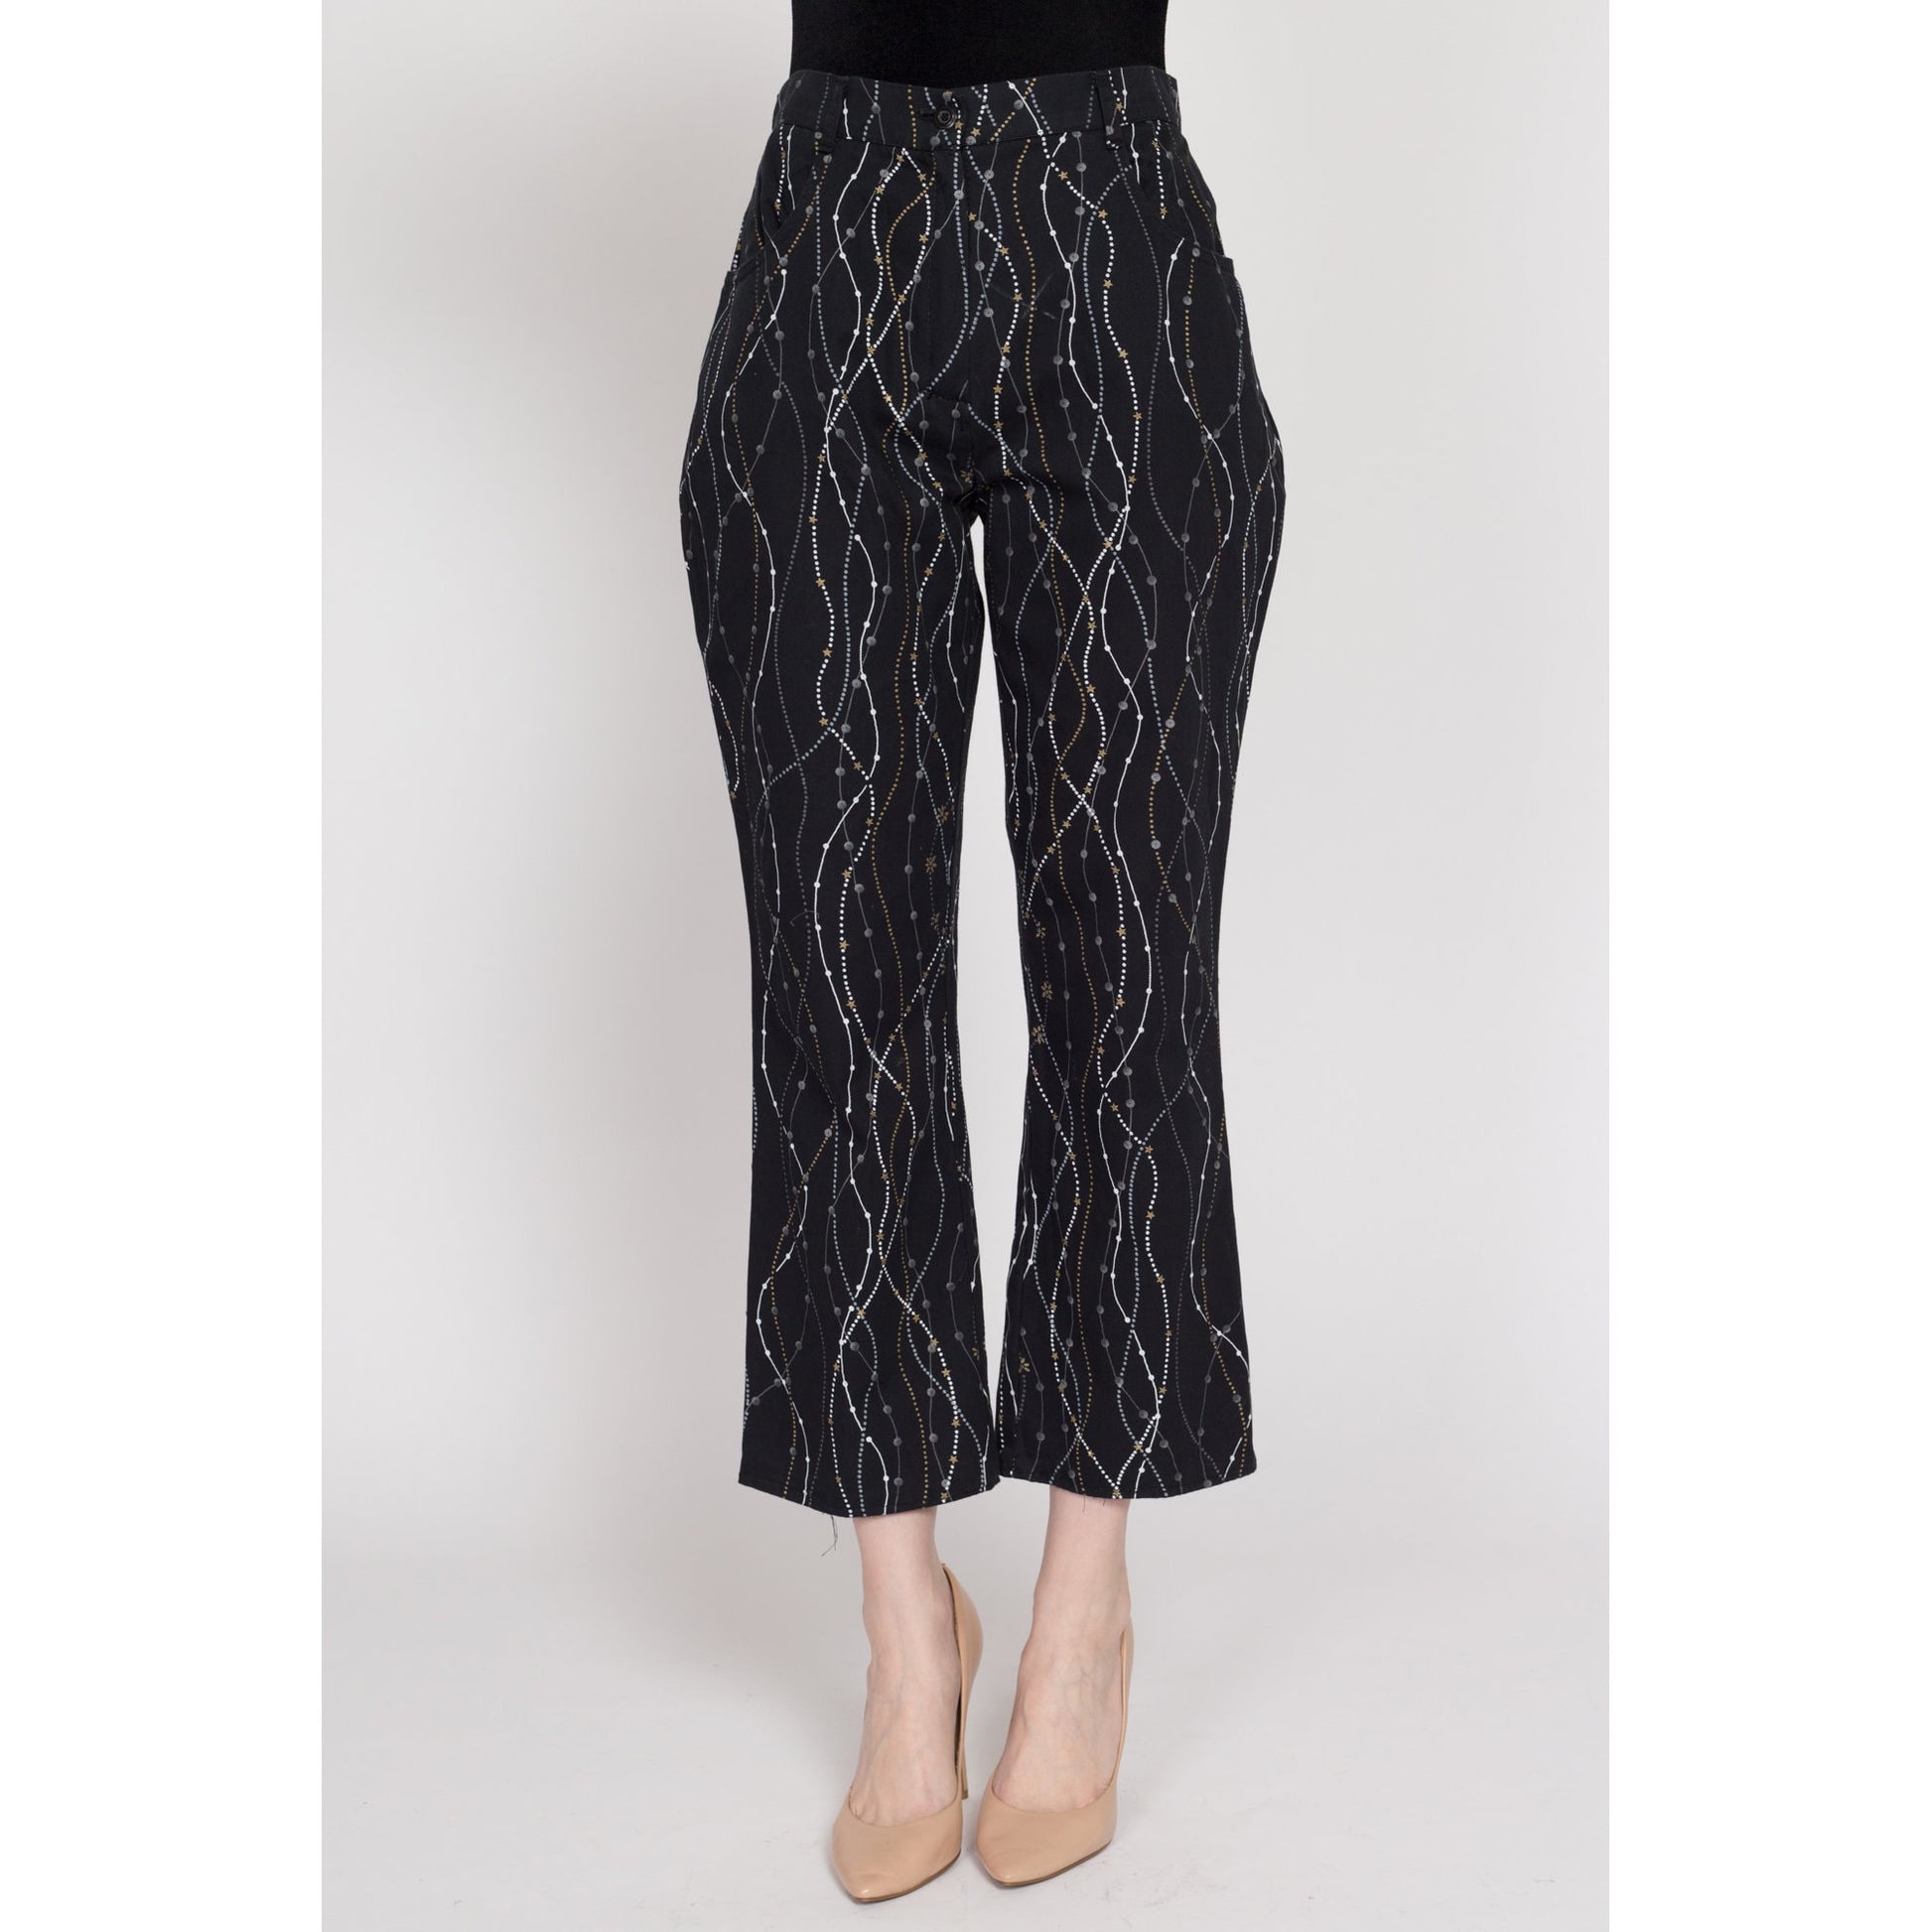 Petite Medium 90s Y2K Black Vine Print Pants | Vintage Boho High Waisted Kick Flare Trousers